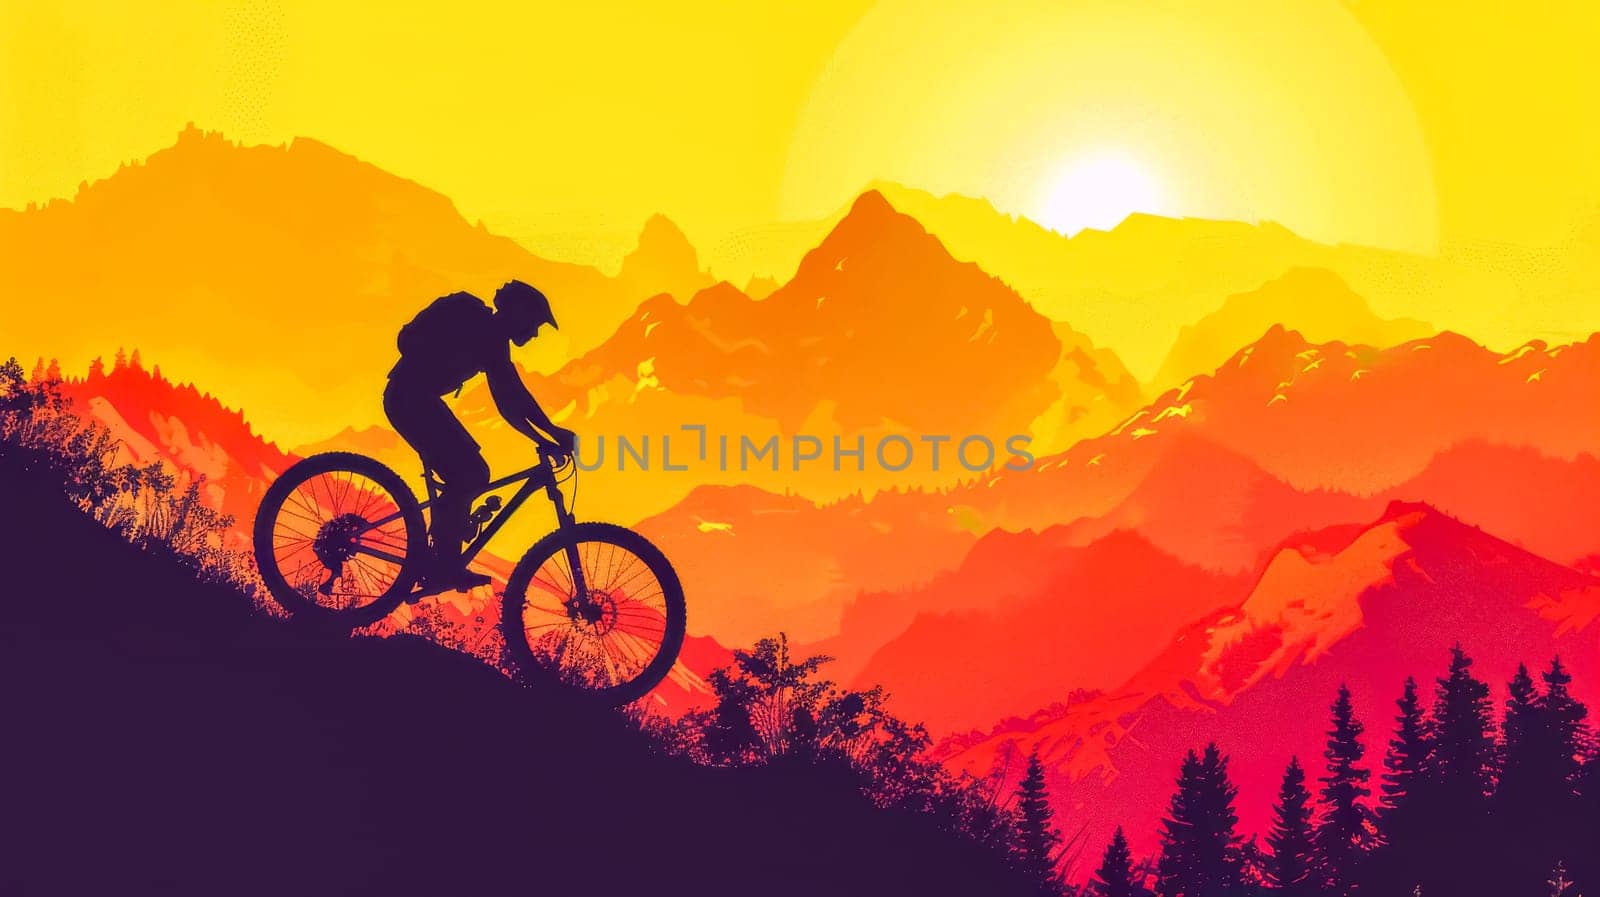 Mountain biking at sunset silhouette by Edophoto